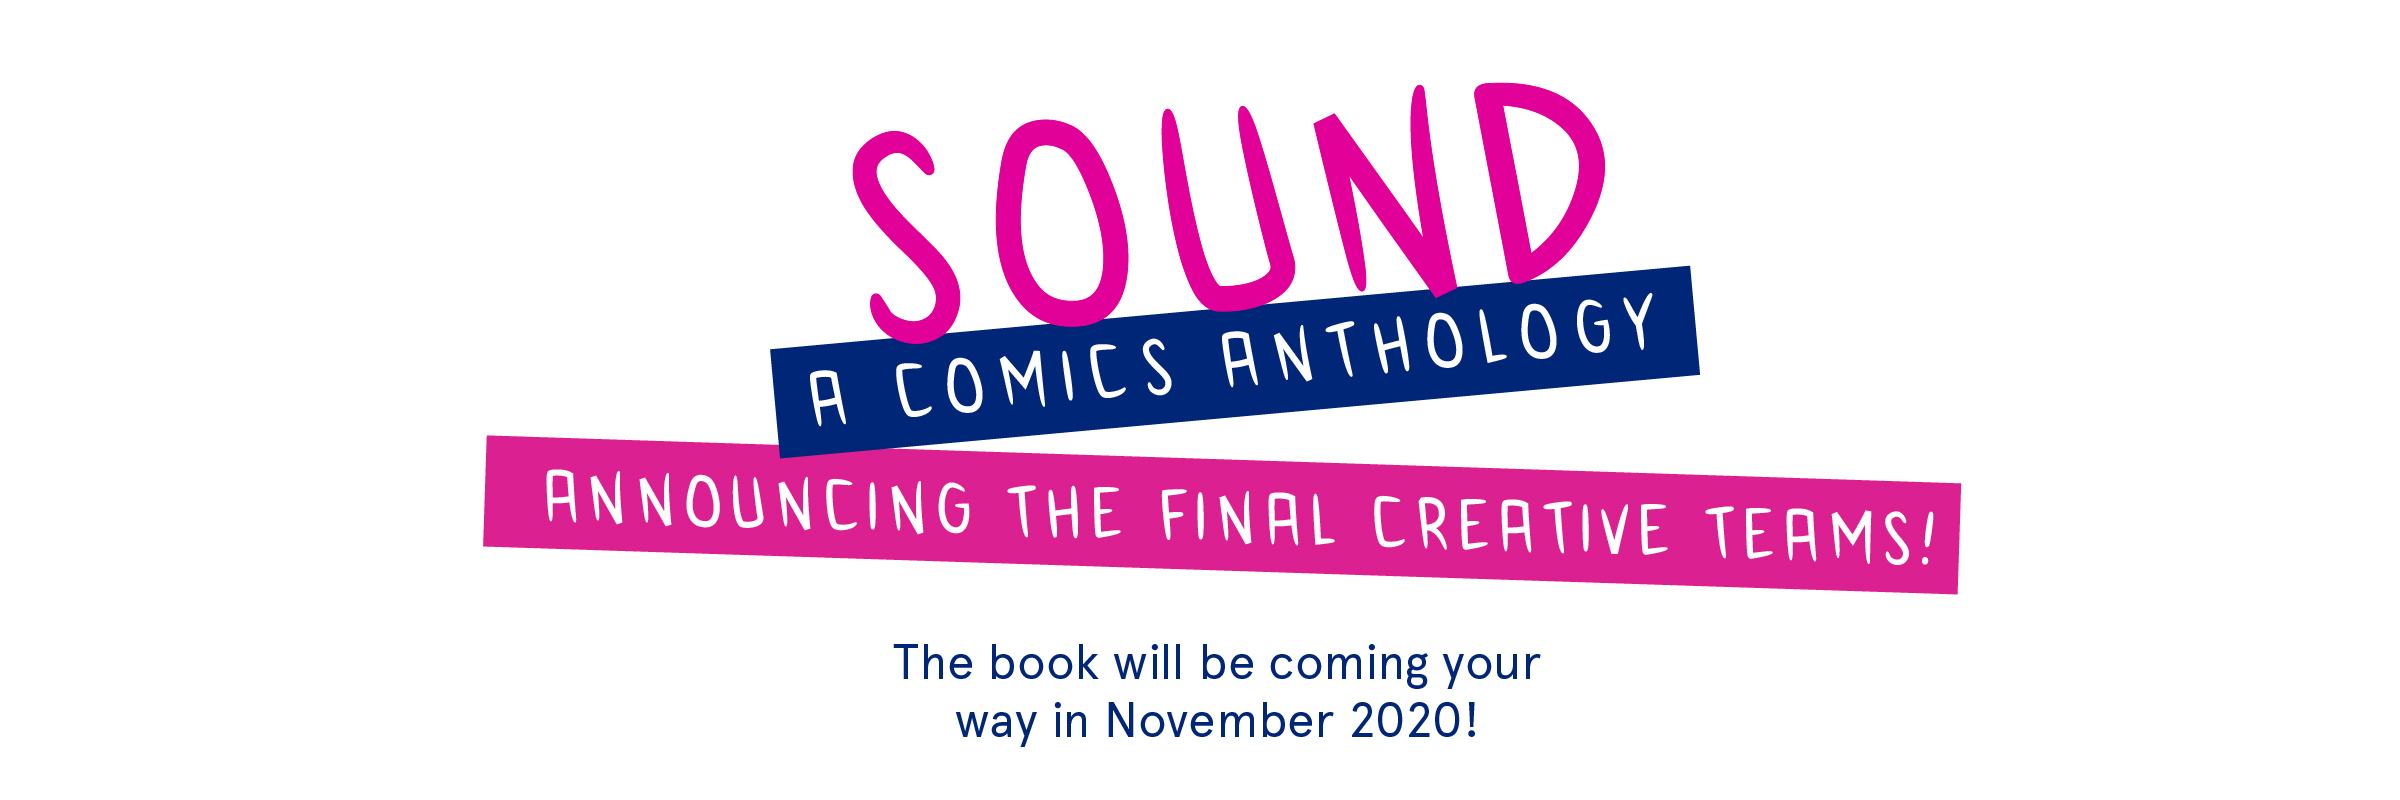 Final Creative Teams for Sound: A Comics Anthology